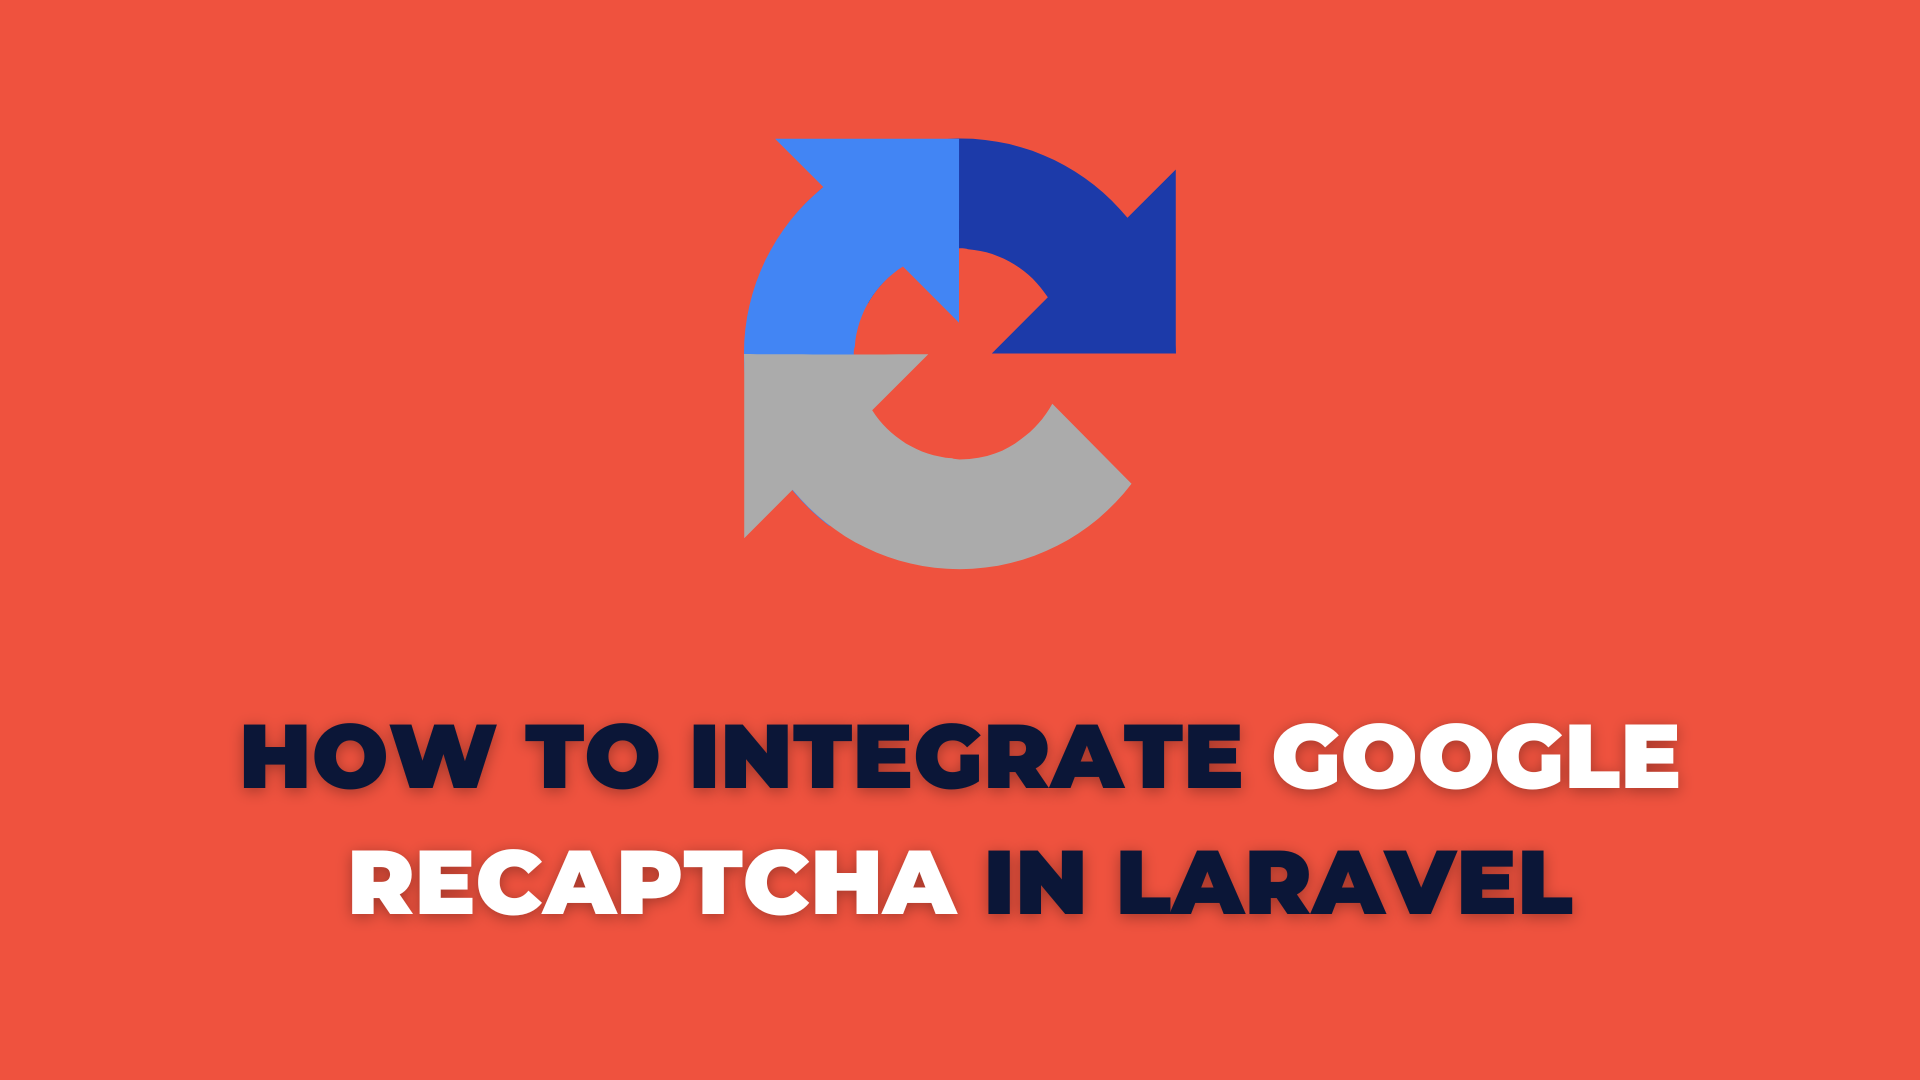 How to integrate Google reCAPTCHA in Laravel